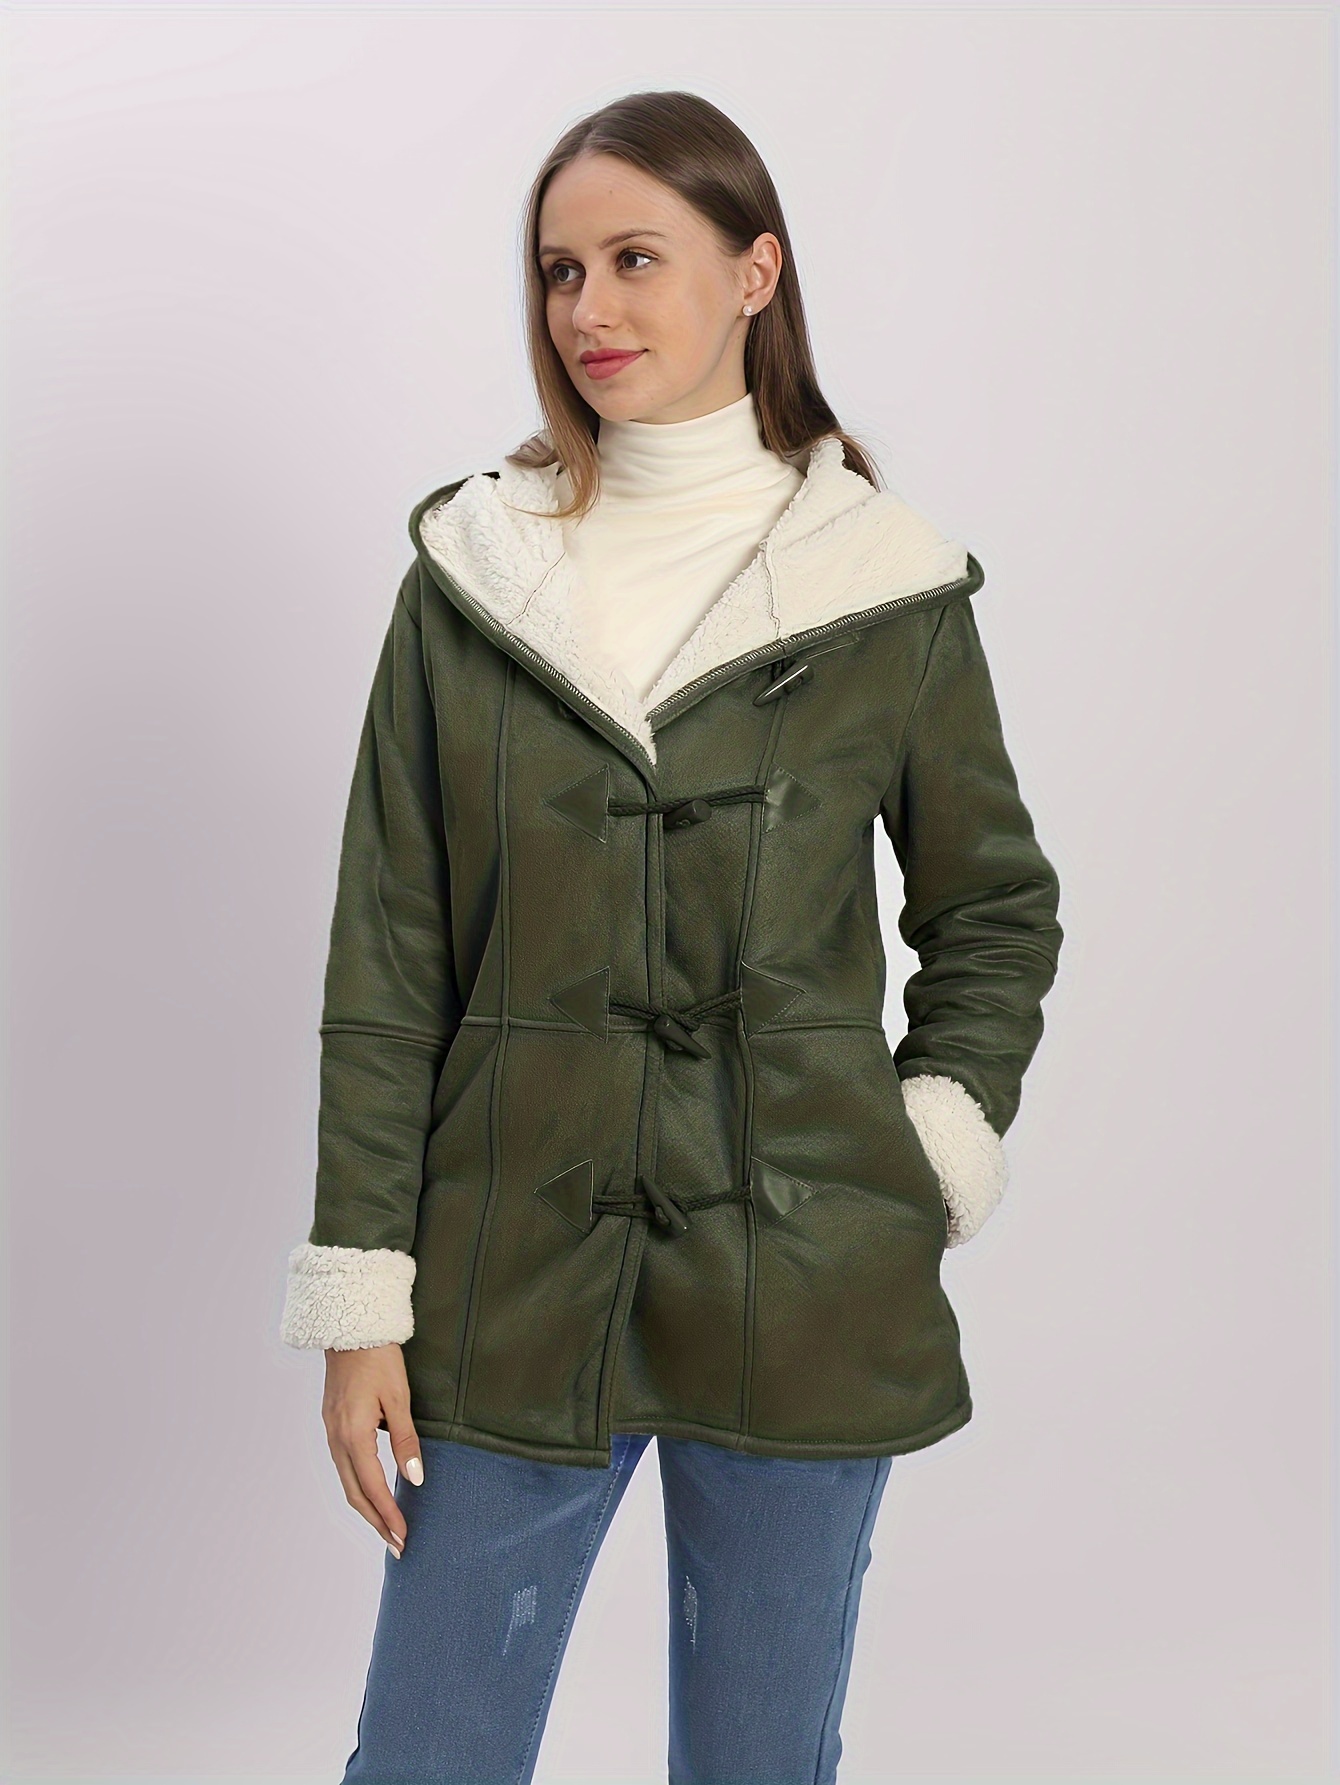 Suéteres para clima frío para mujer, suéter con capucha, abrigo de lana,  abrigo de algodón, chaqueta de forro polar del norte para mujer